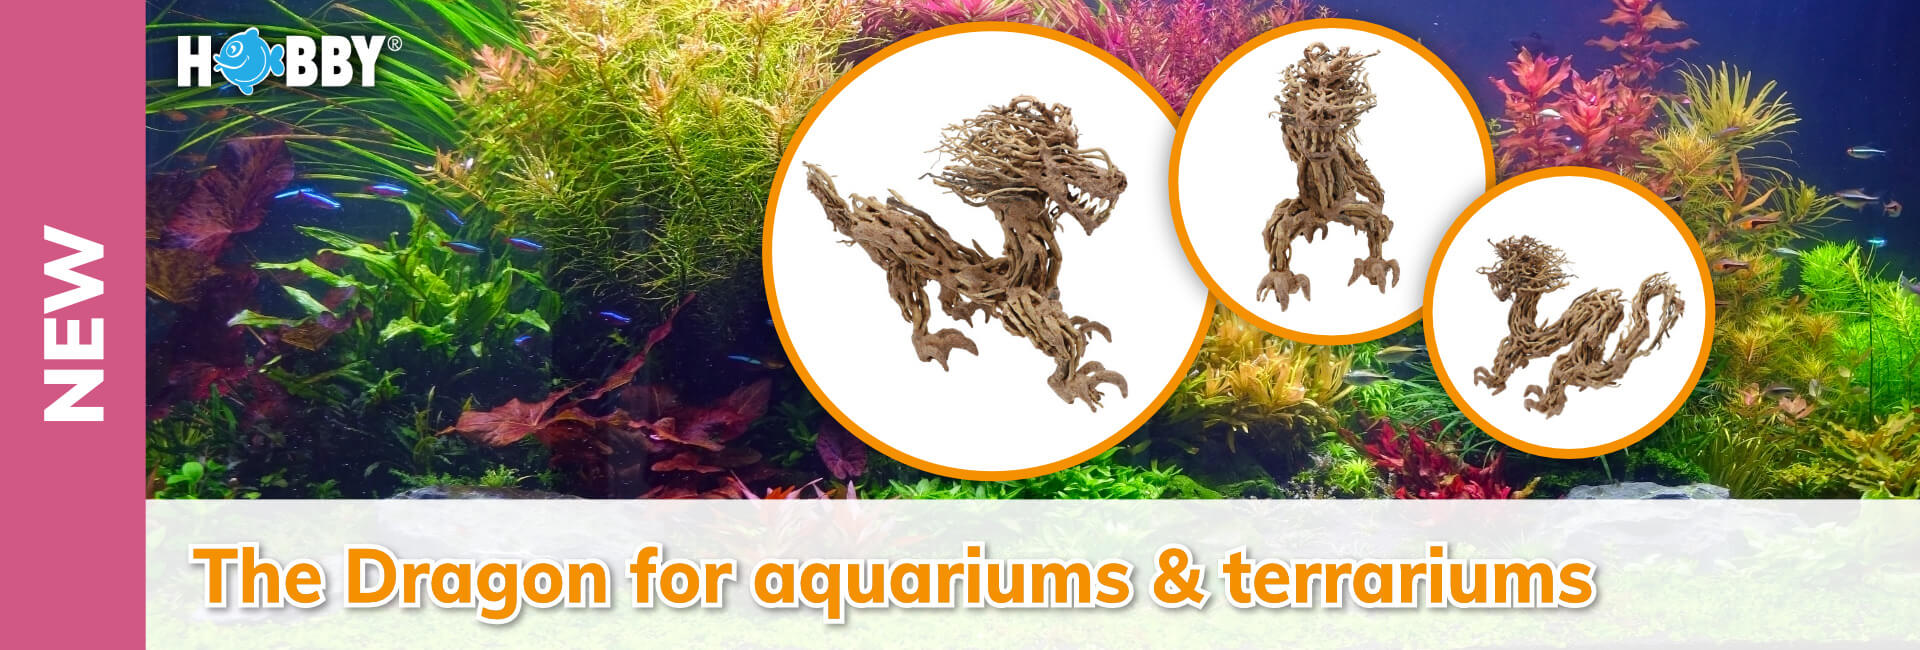 Hobby - The Dragon for aquariums & terrariums